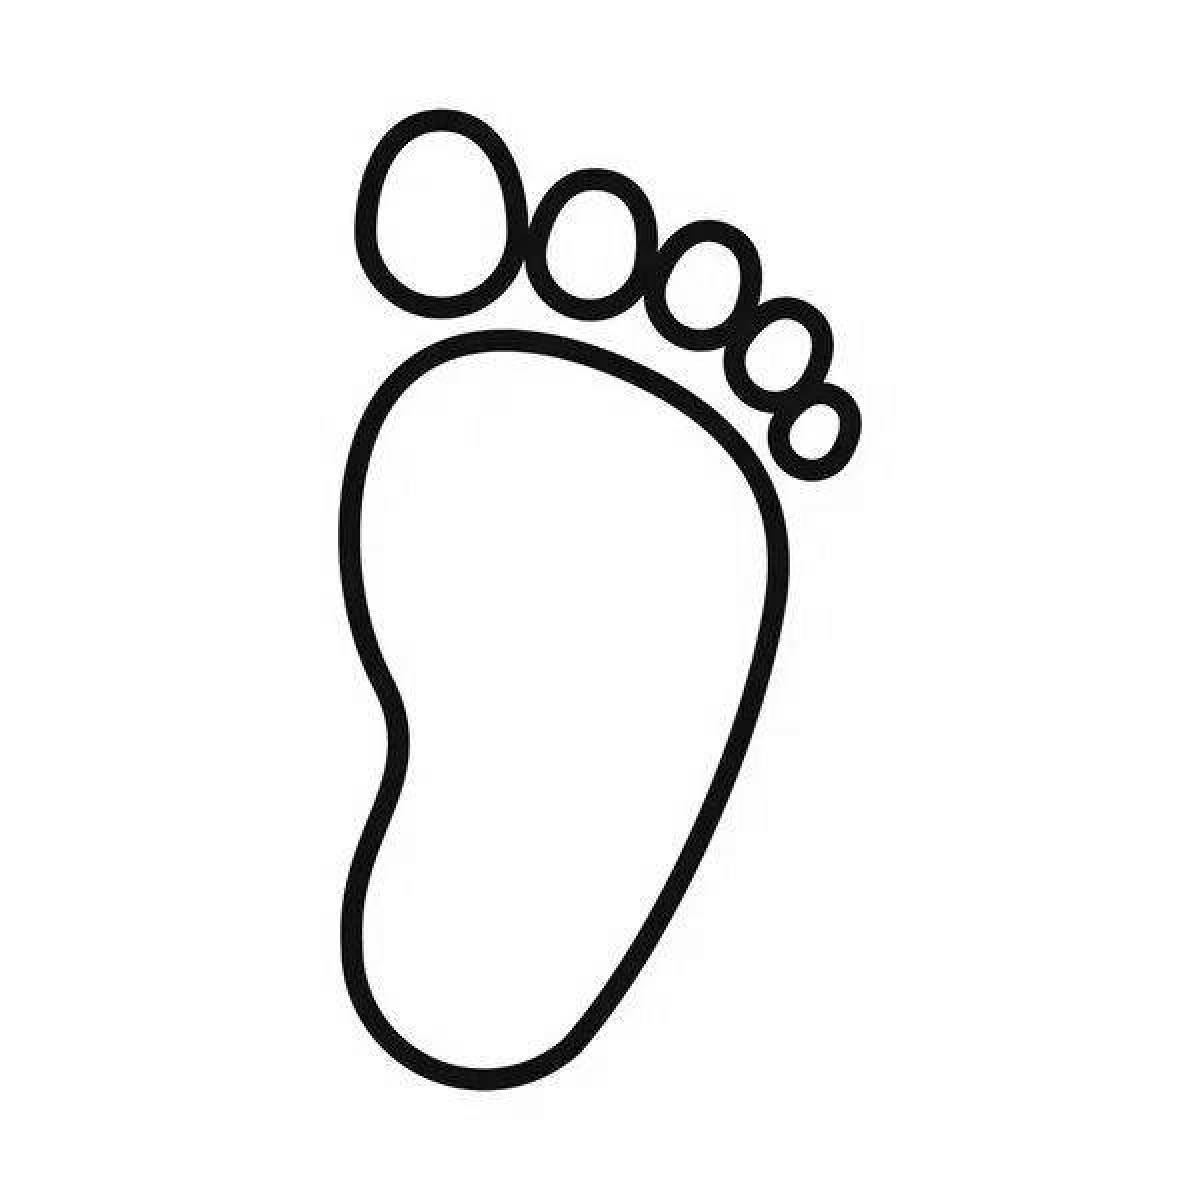 Coloring page of human footprints